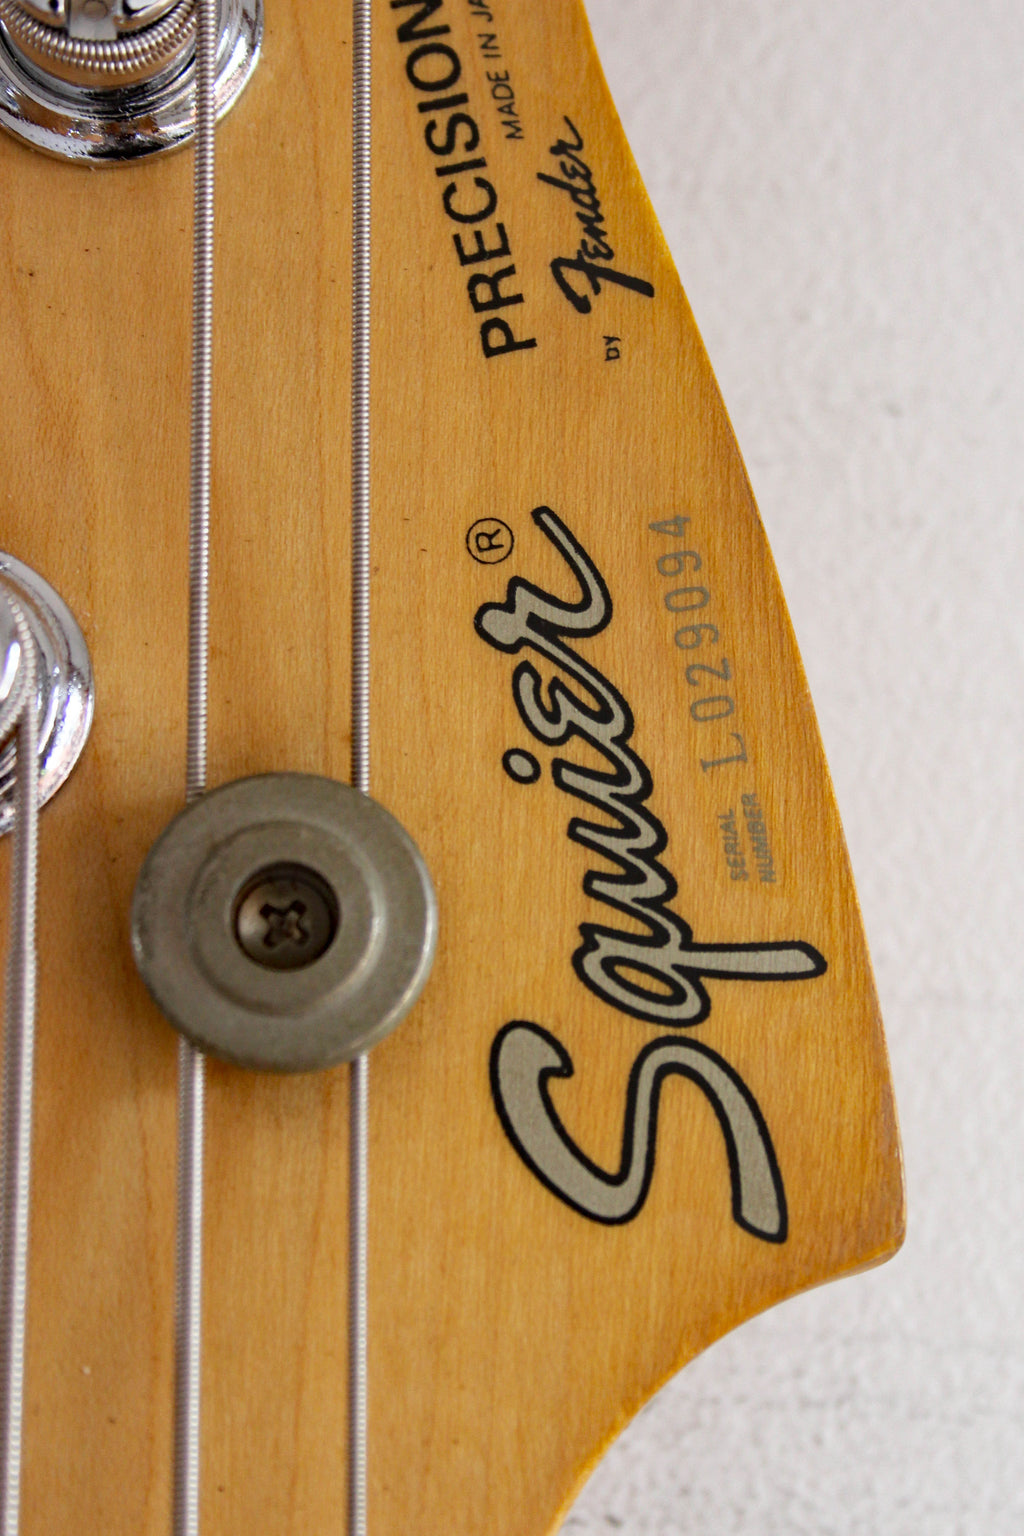 Used Squier MIJ Precision Bass Silver Series Sunburst 1991/2